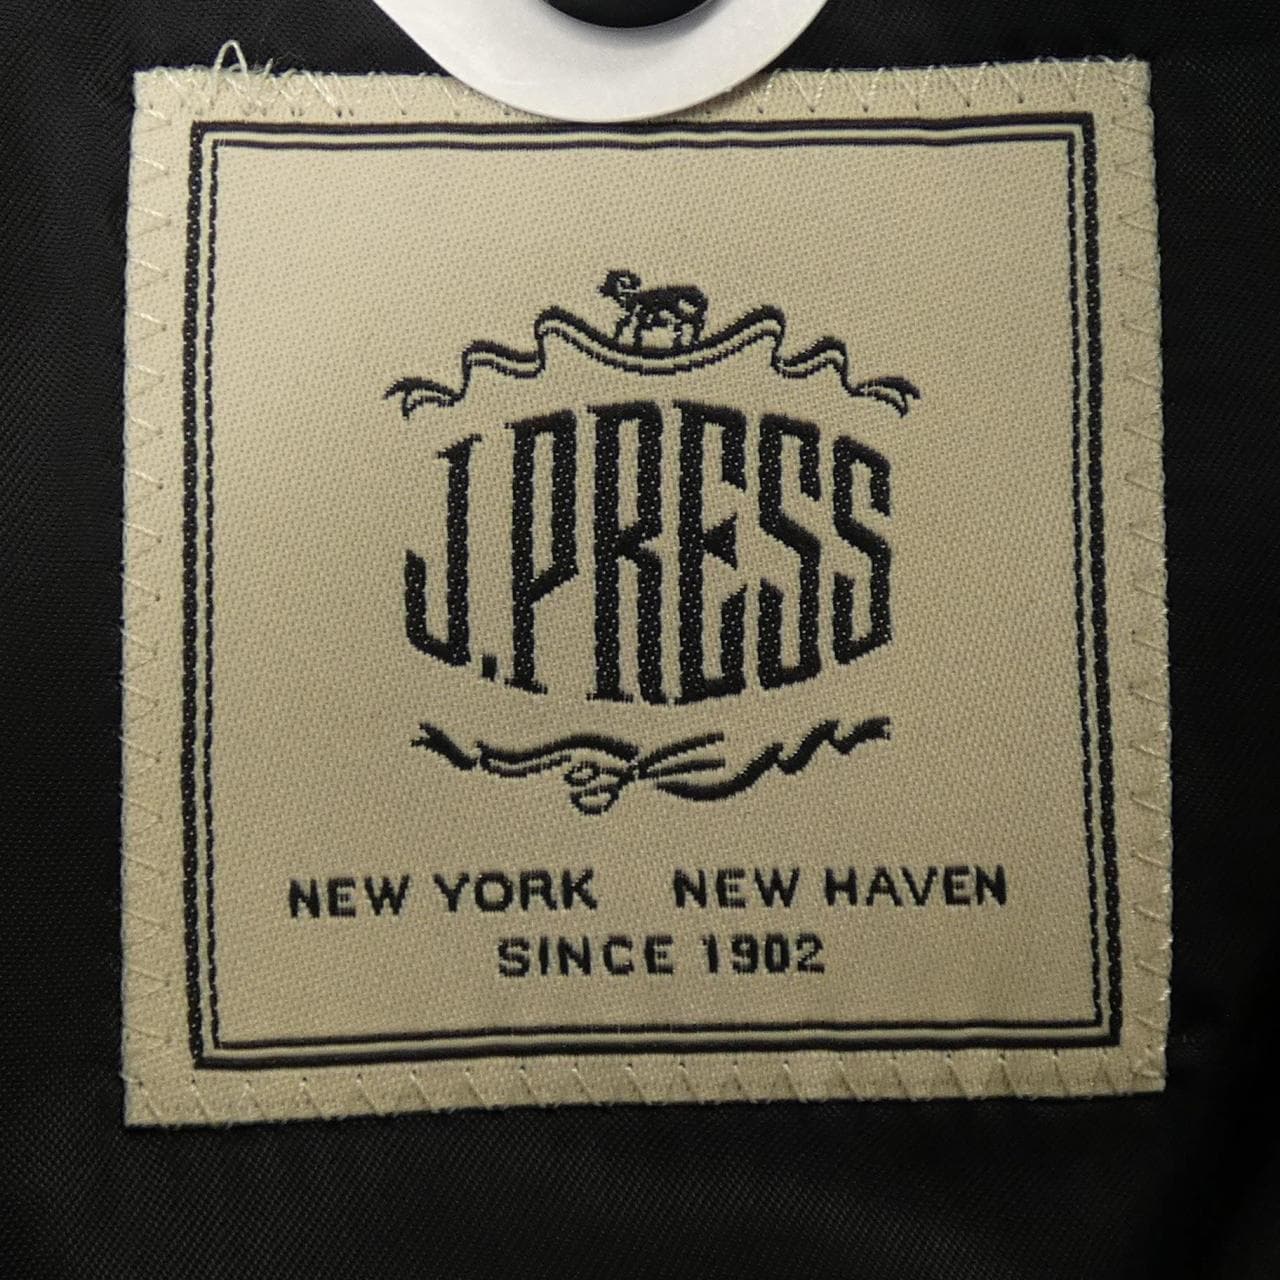 J.PRESS J.PRESS suit